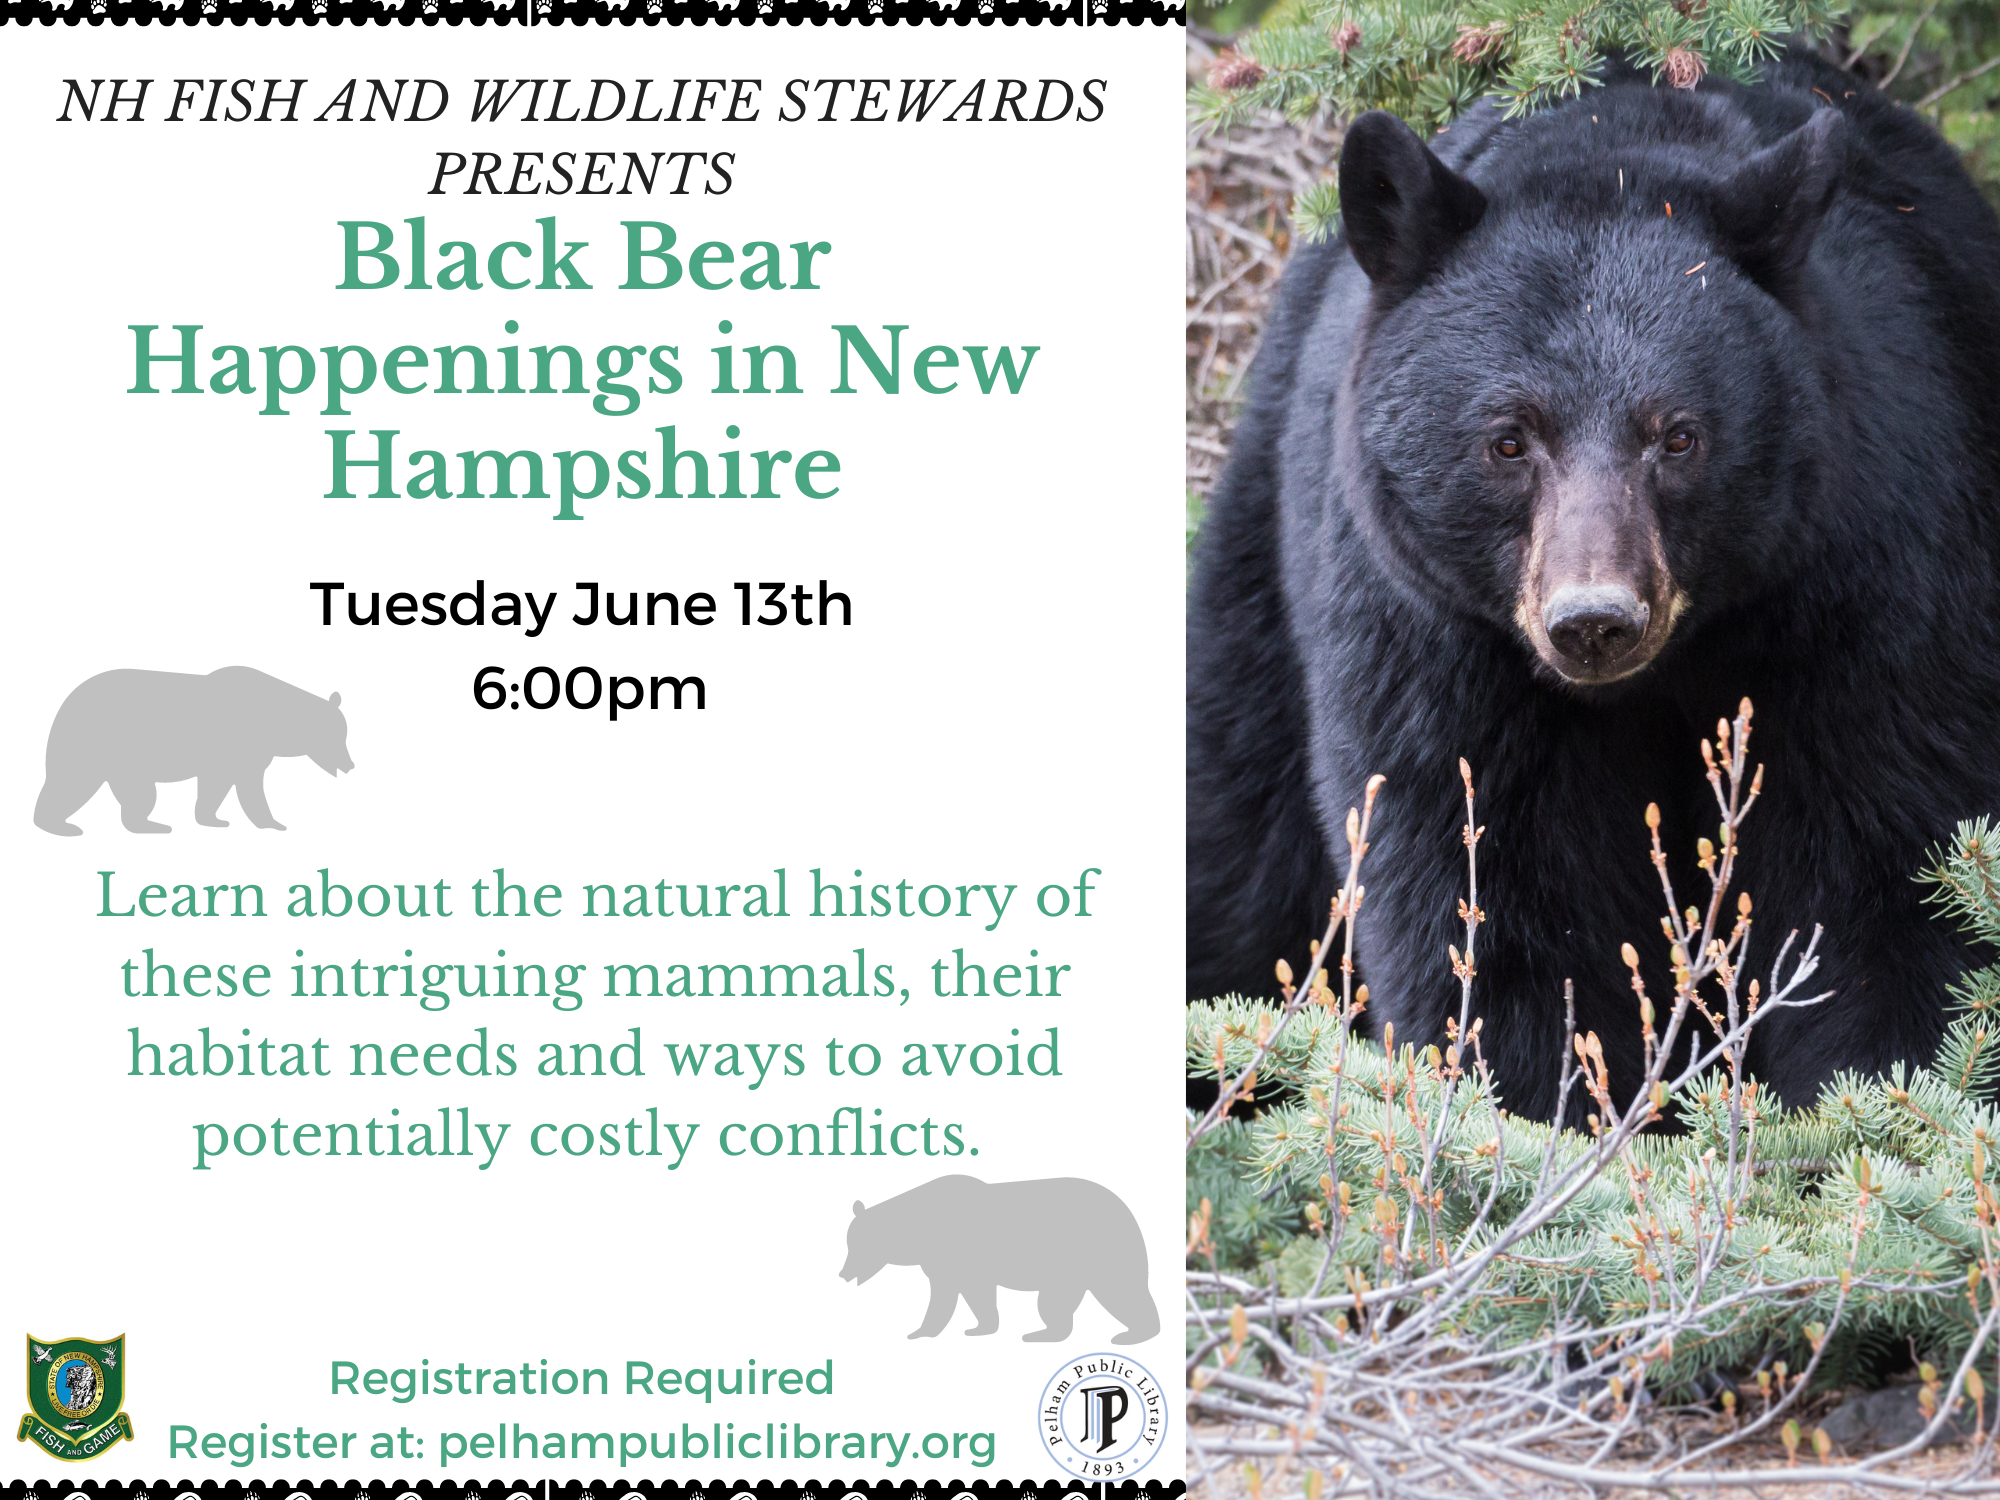 Black Bear Happenings in New Hampshire, June 13th, 6:00pm